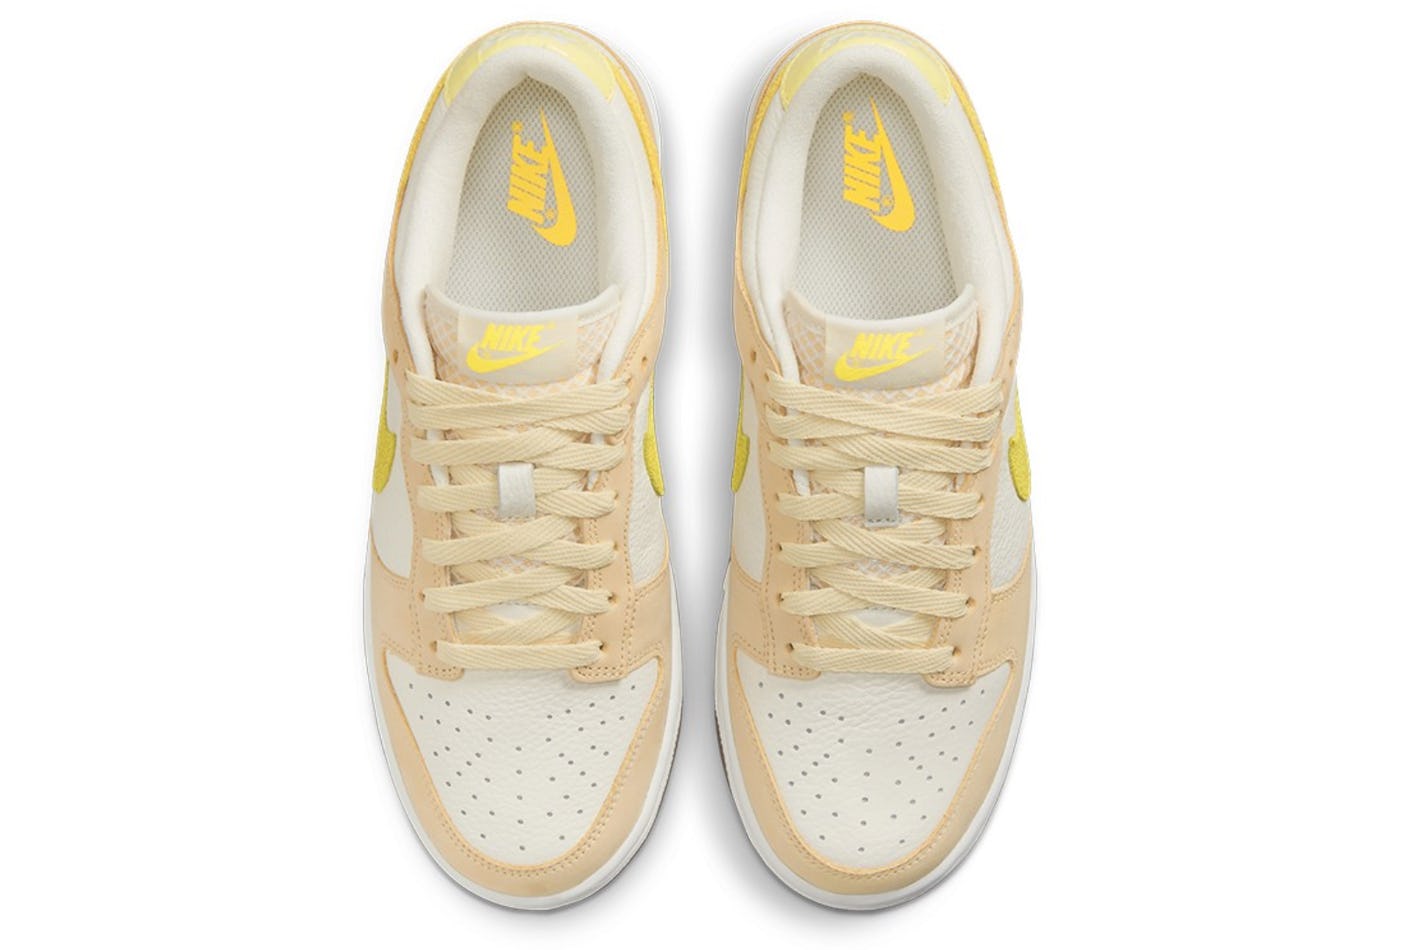 Nike’s women-exclusive Dunk Low 'Lemon Drop' sneakers are a sweet treat